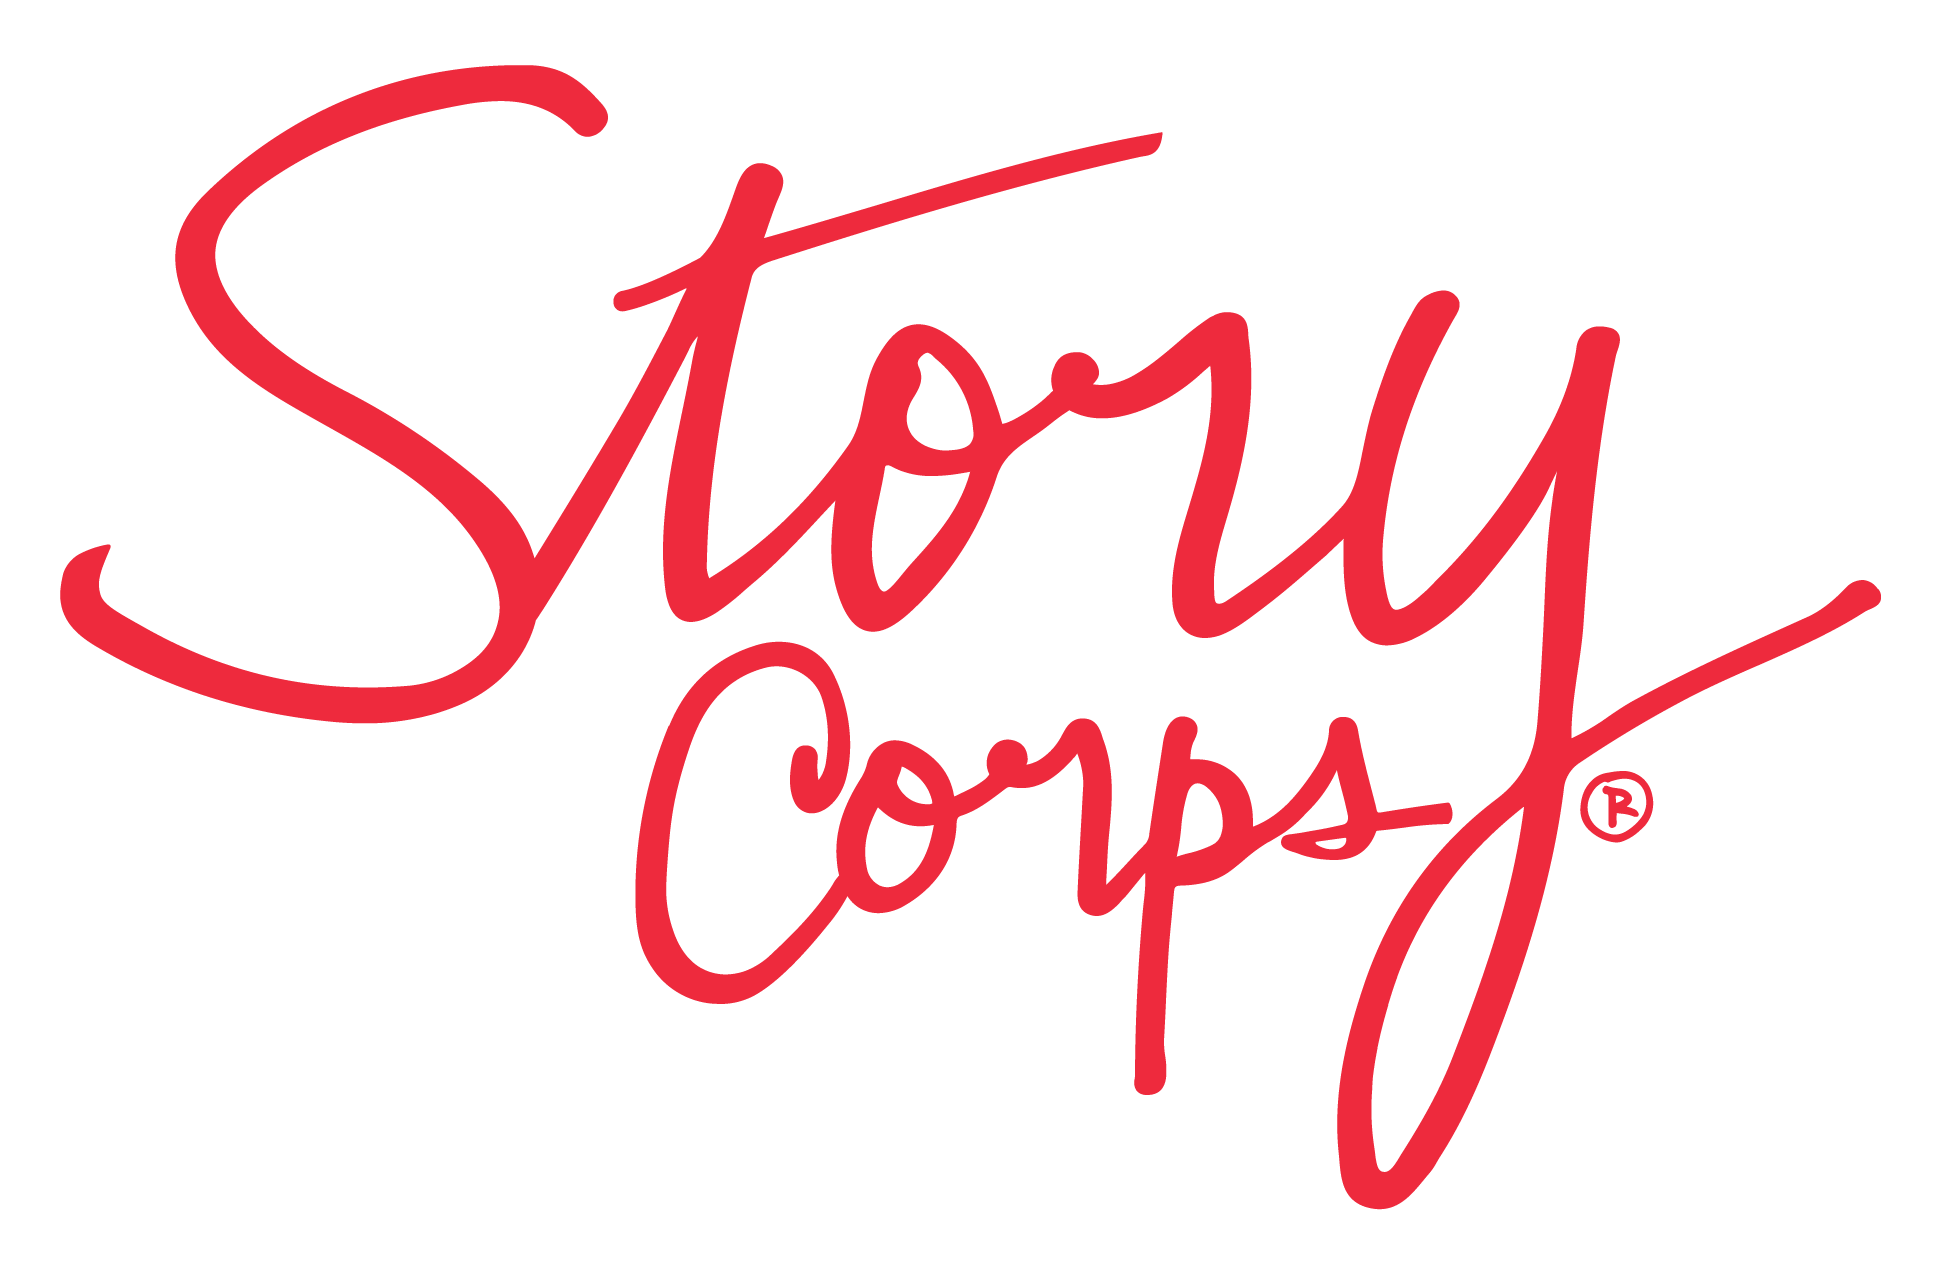 StoryCorps logo